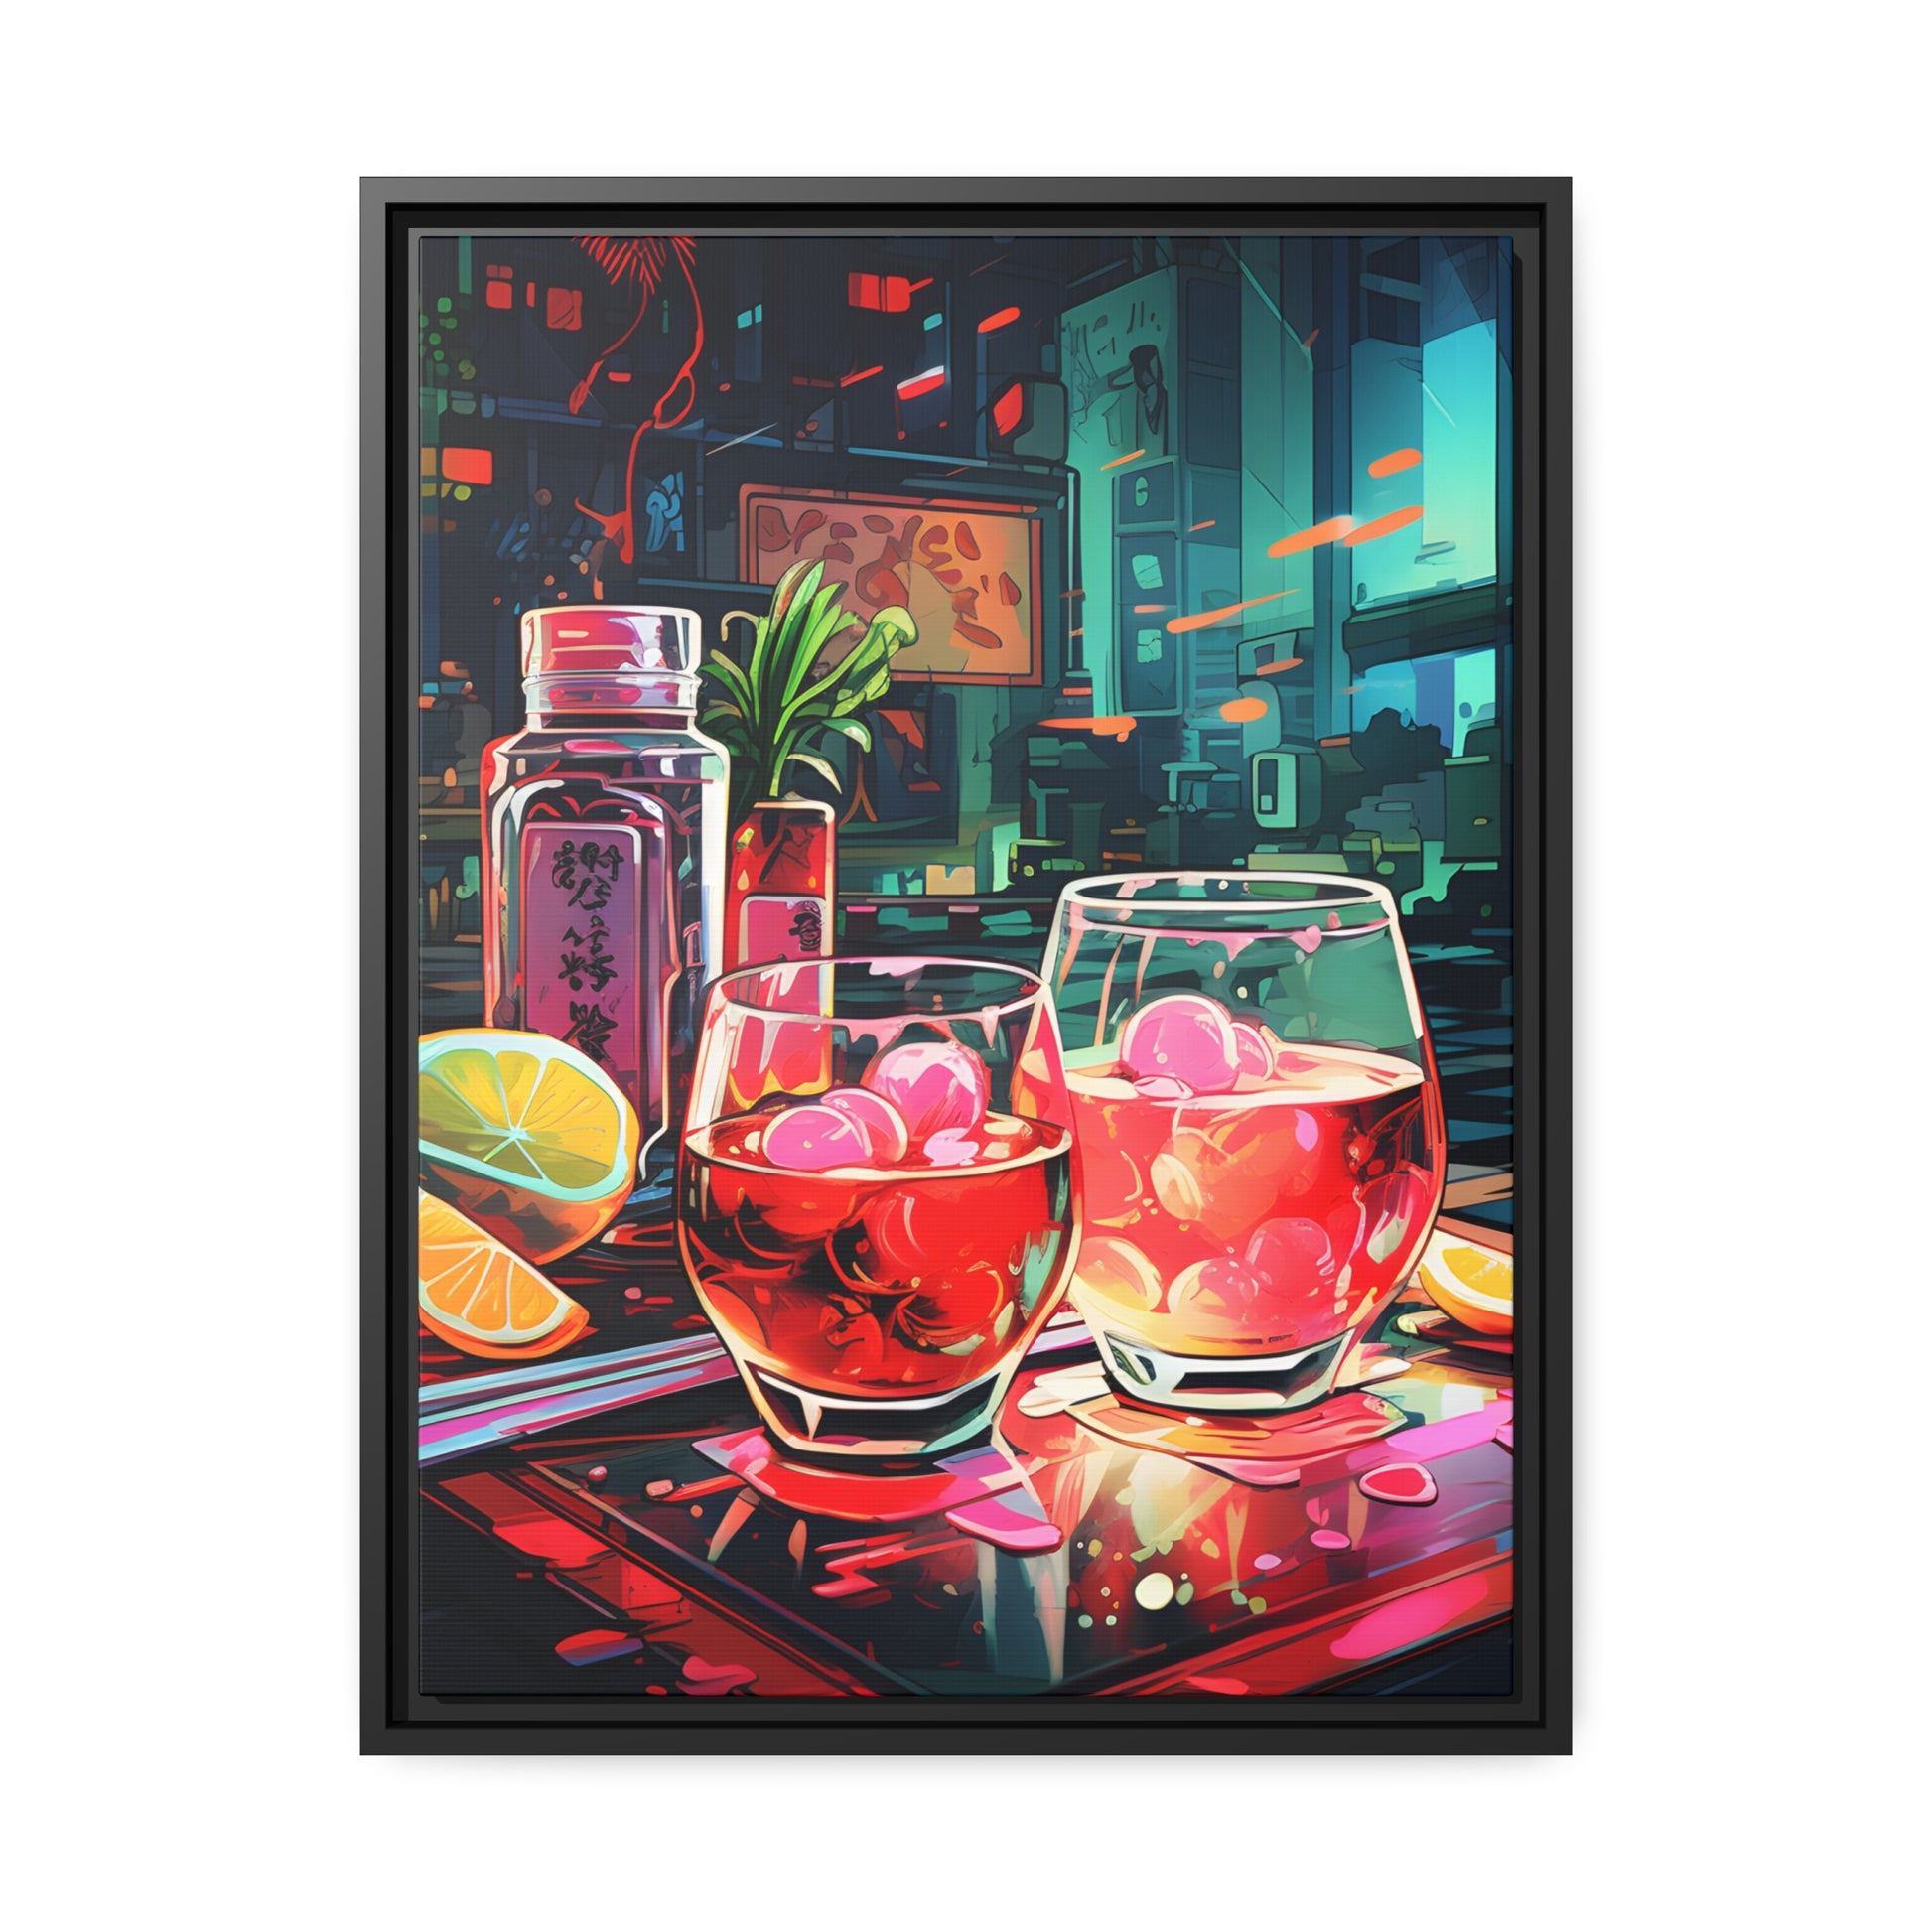 Framed Canvas Artwork Japanese Manga Style Alcohol And Night Life Bar Art Alcoholic Drink With Ice And Lemon Slice Floating Frame Canvas Neon Light Bar Artwork Urban Setting Lifestyle